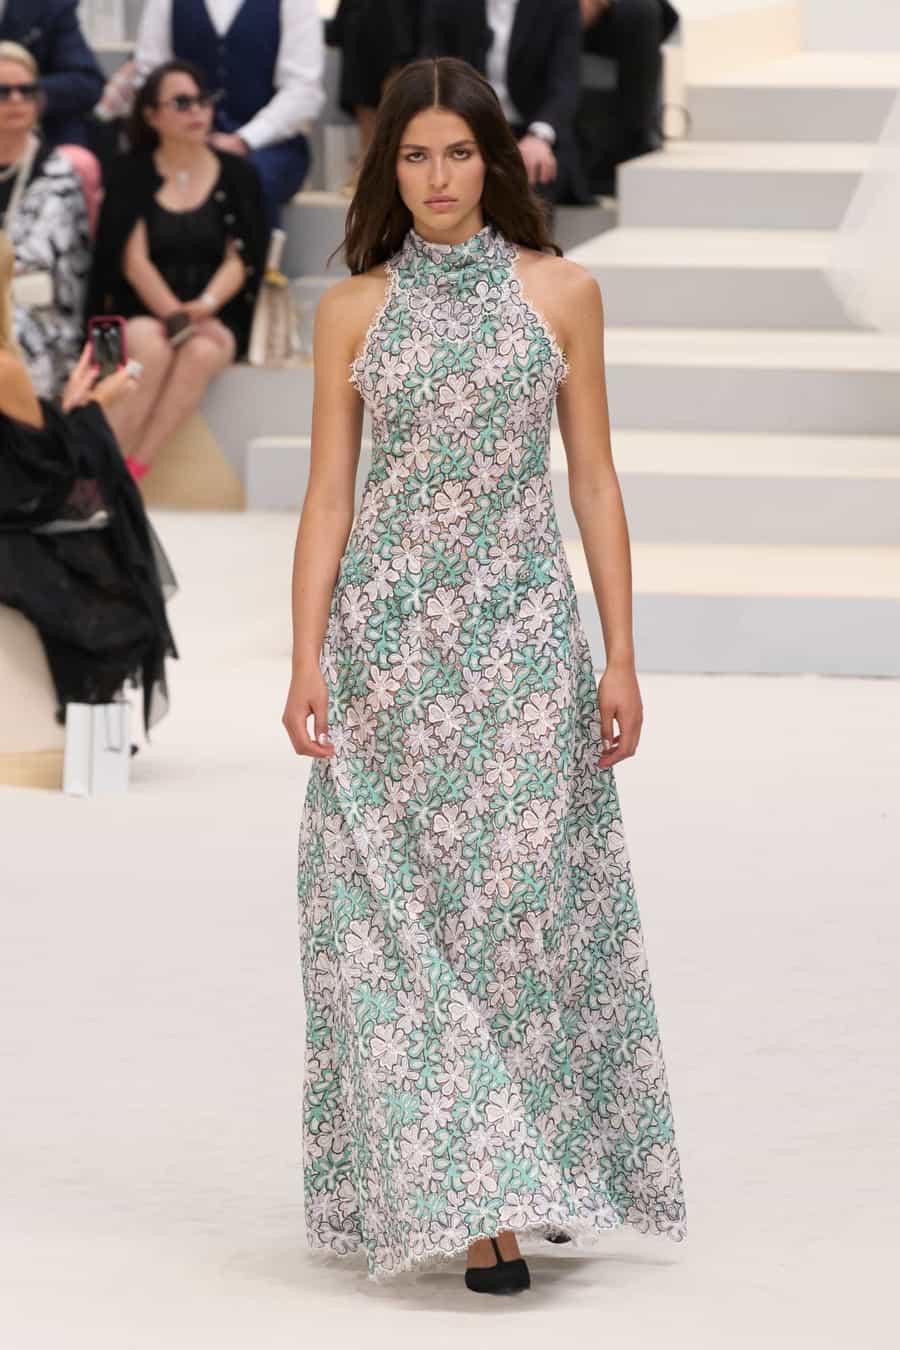 CHanel model sports a retro floral-print dress for Paris Fashion Week 2022. 